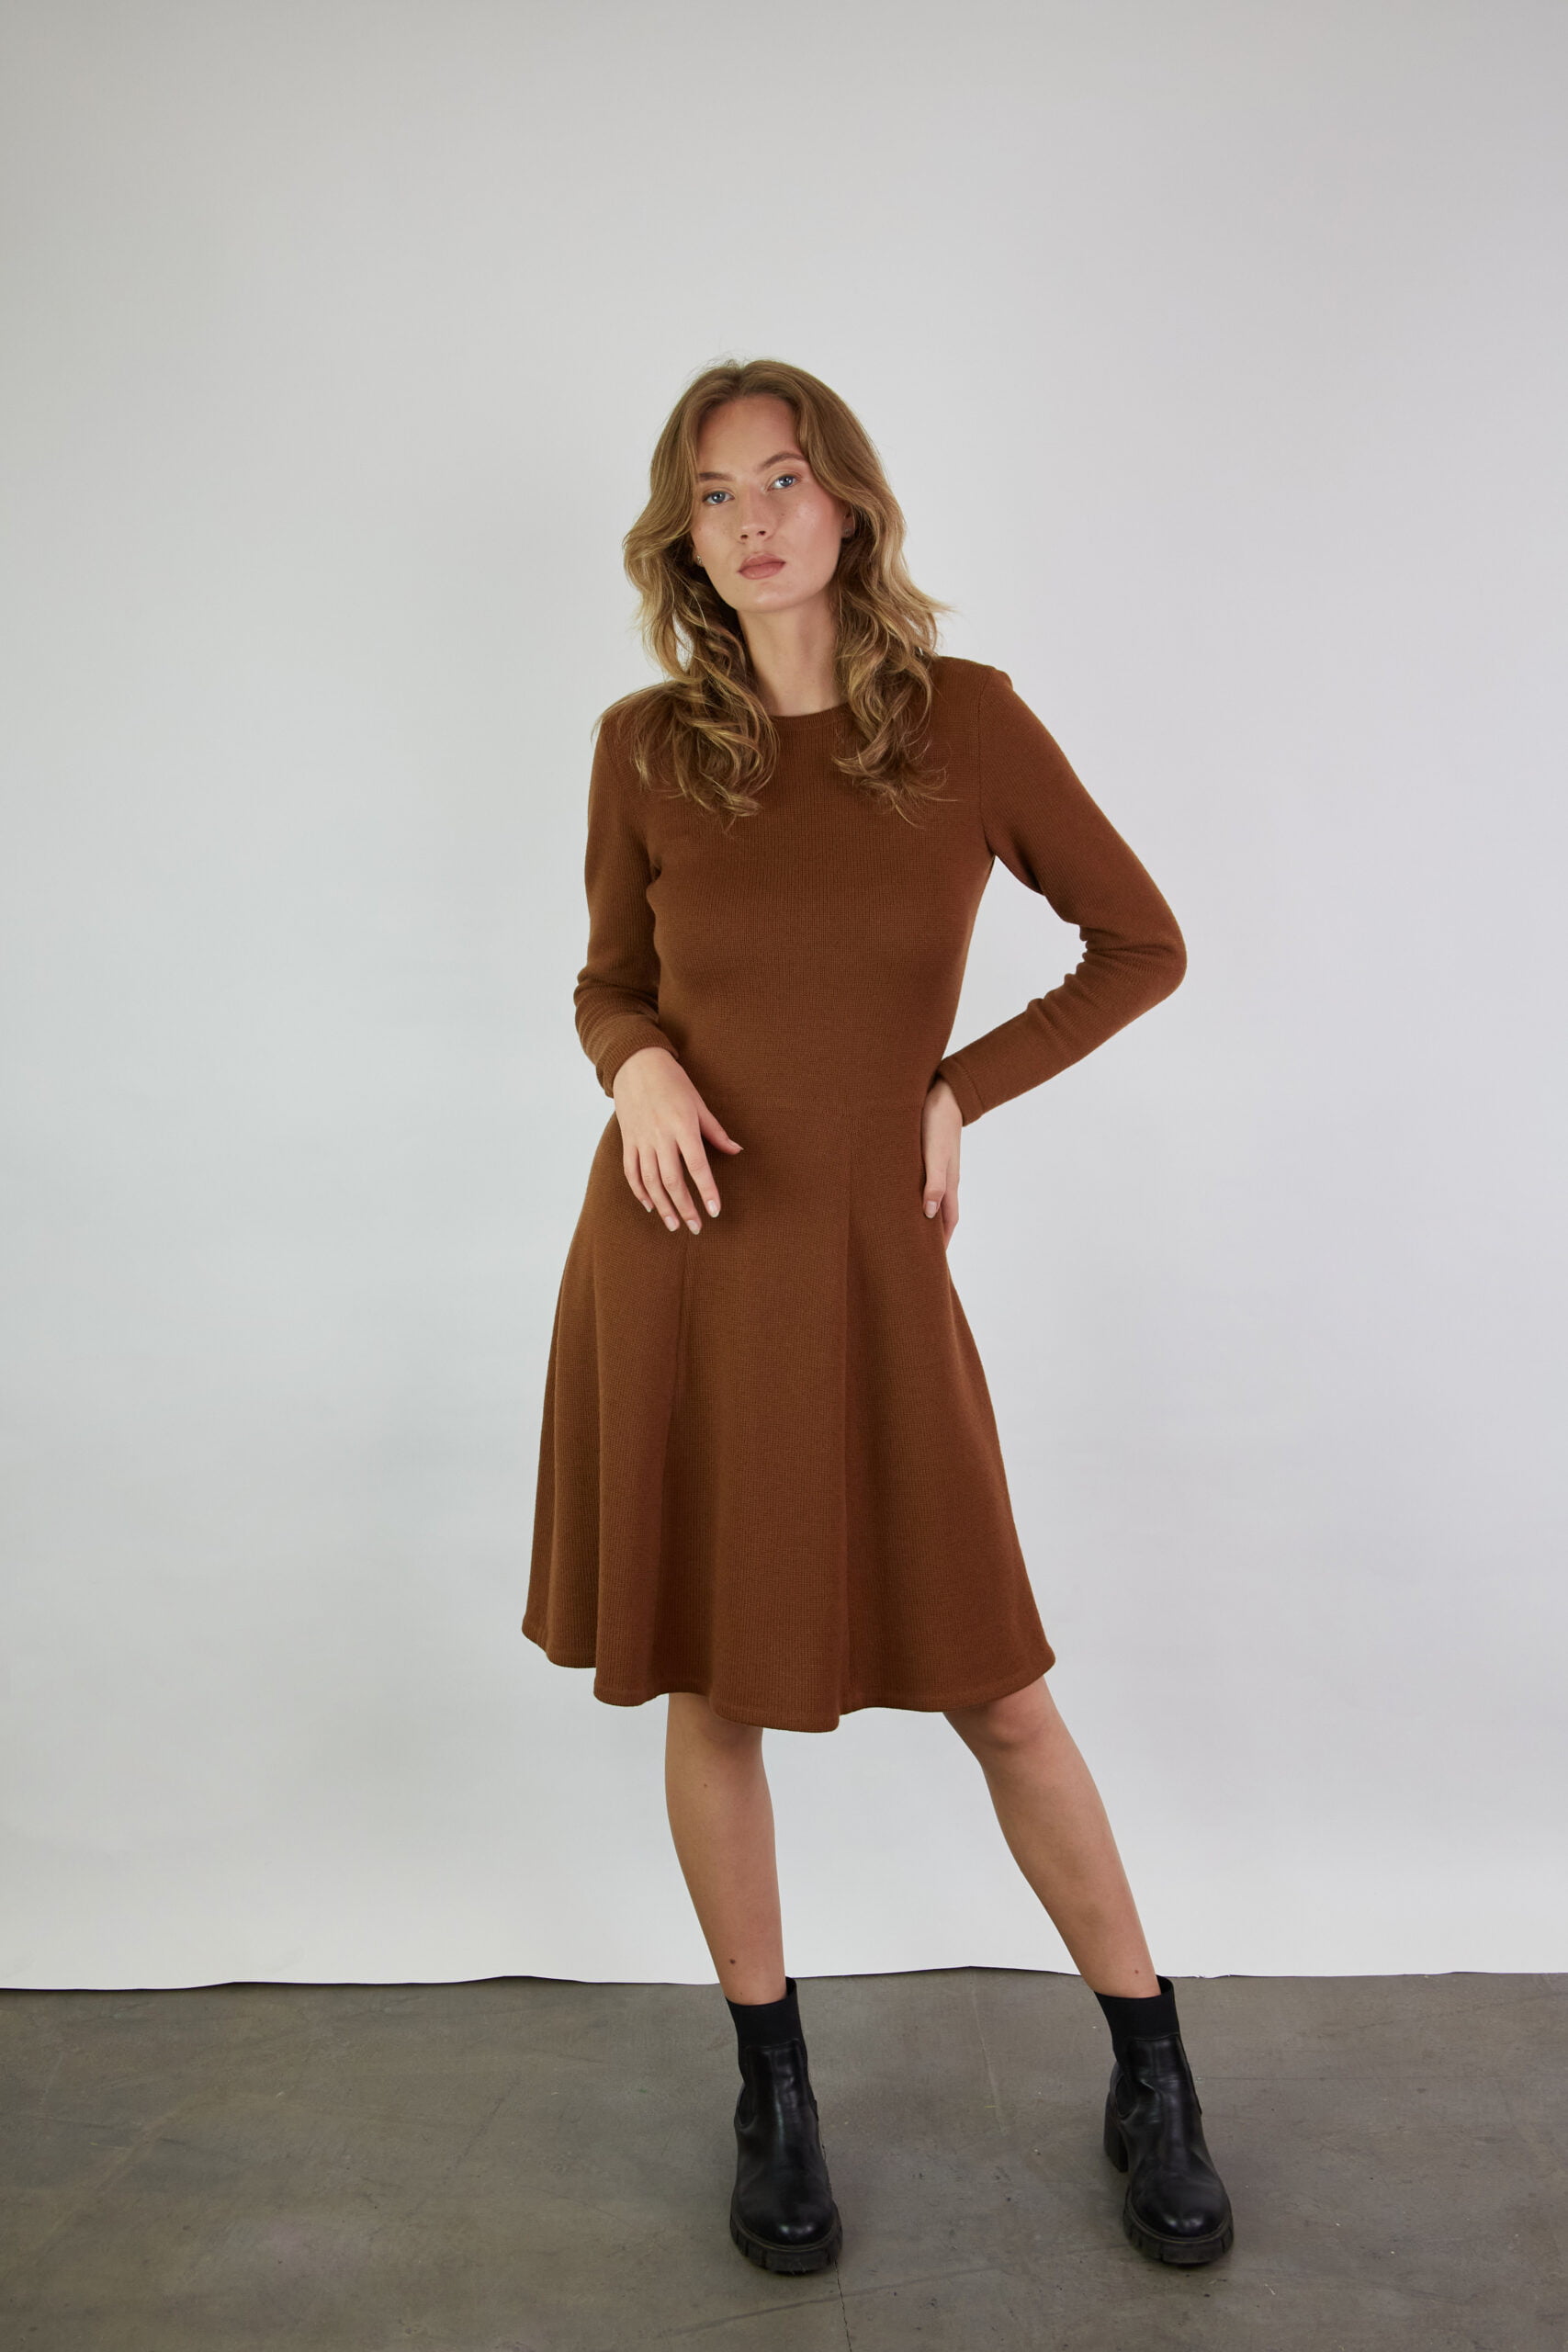 Minimalist merino wool dress with a A-line skirt.